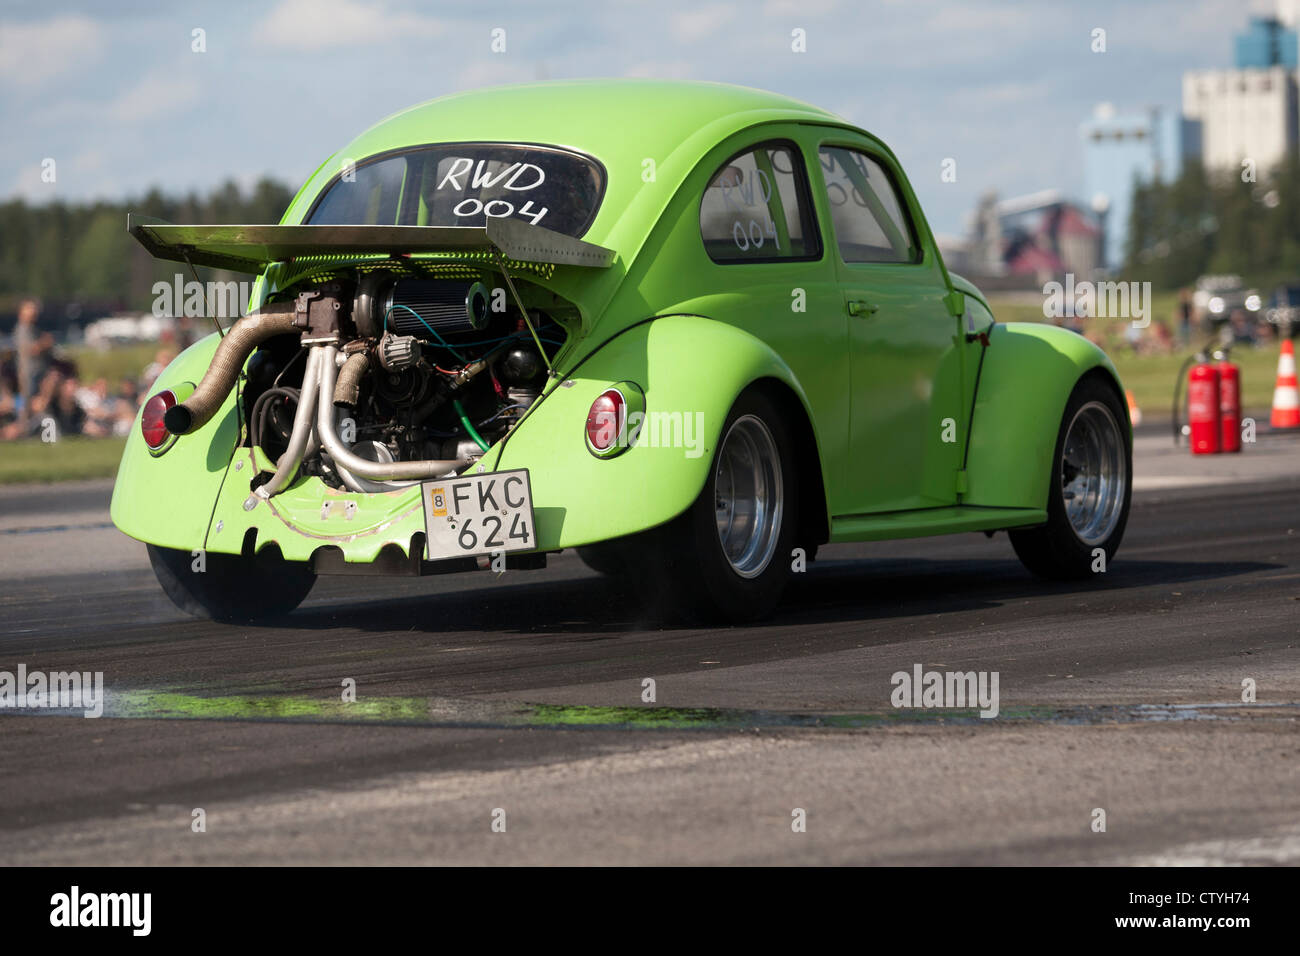 Drag racing with VW turbo Stock Photo - Alamy